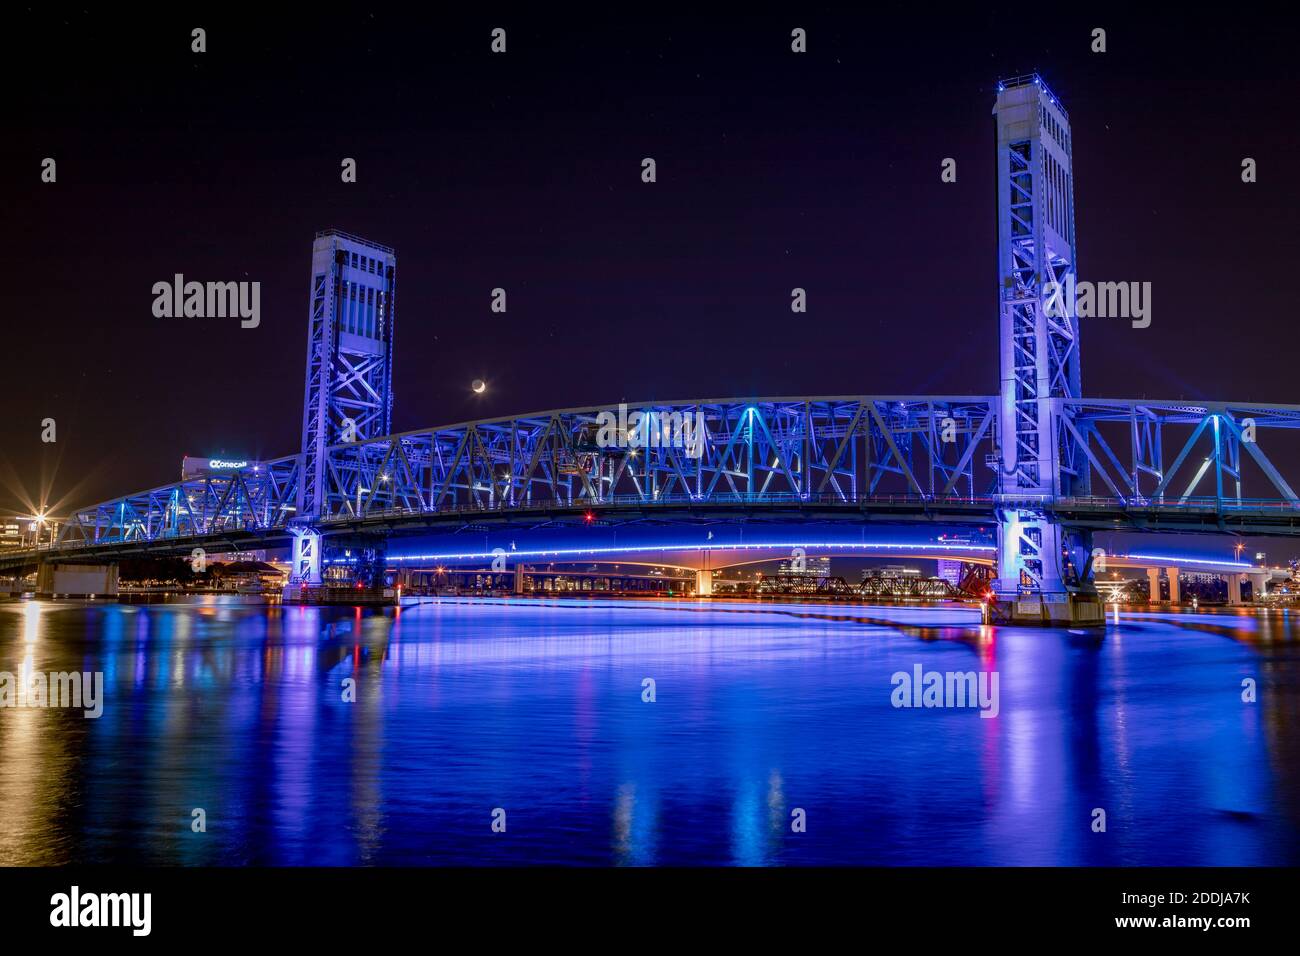 Jacksonville Riverbank Stockfoto